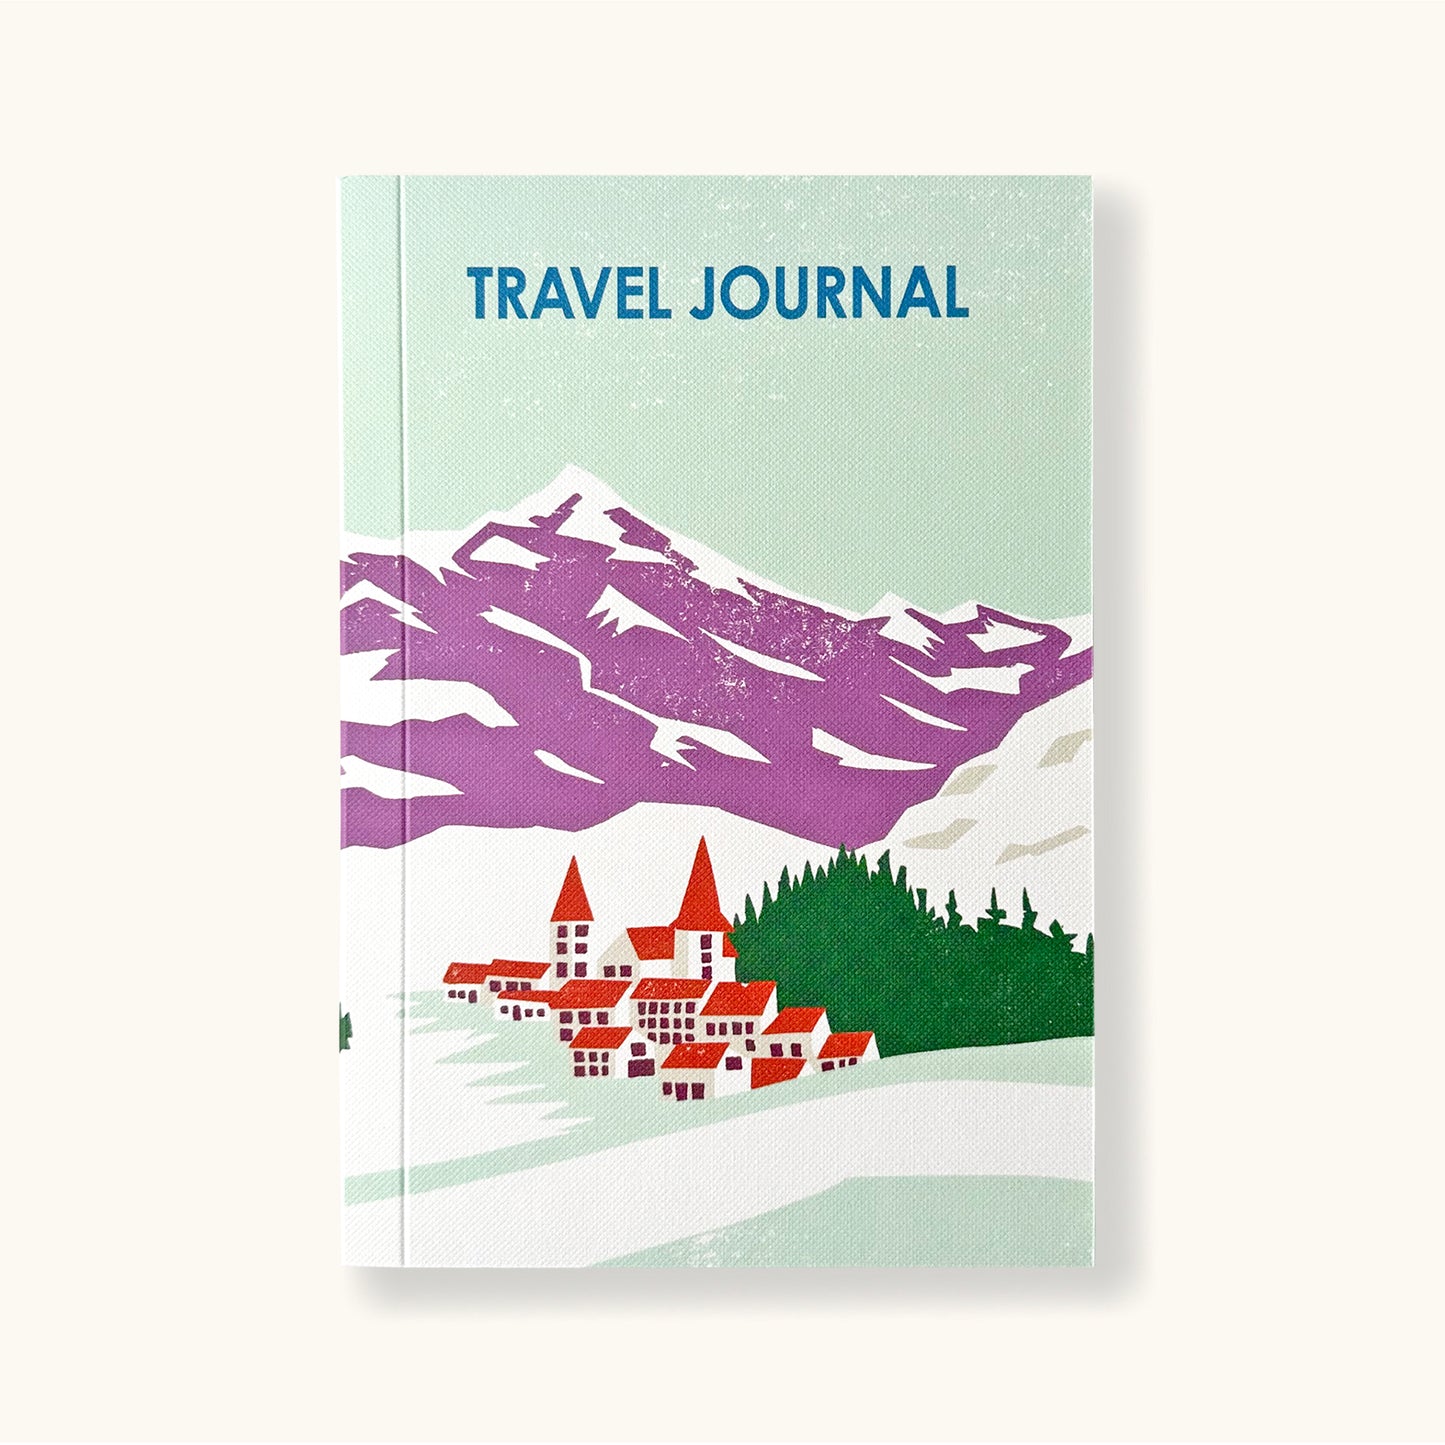 Alpine Travel Journal - Sukie